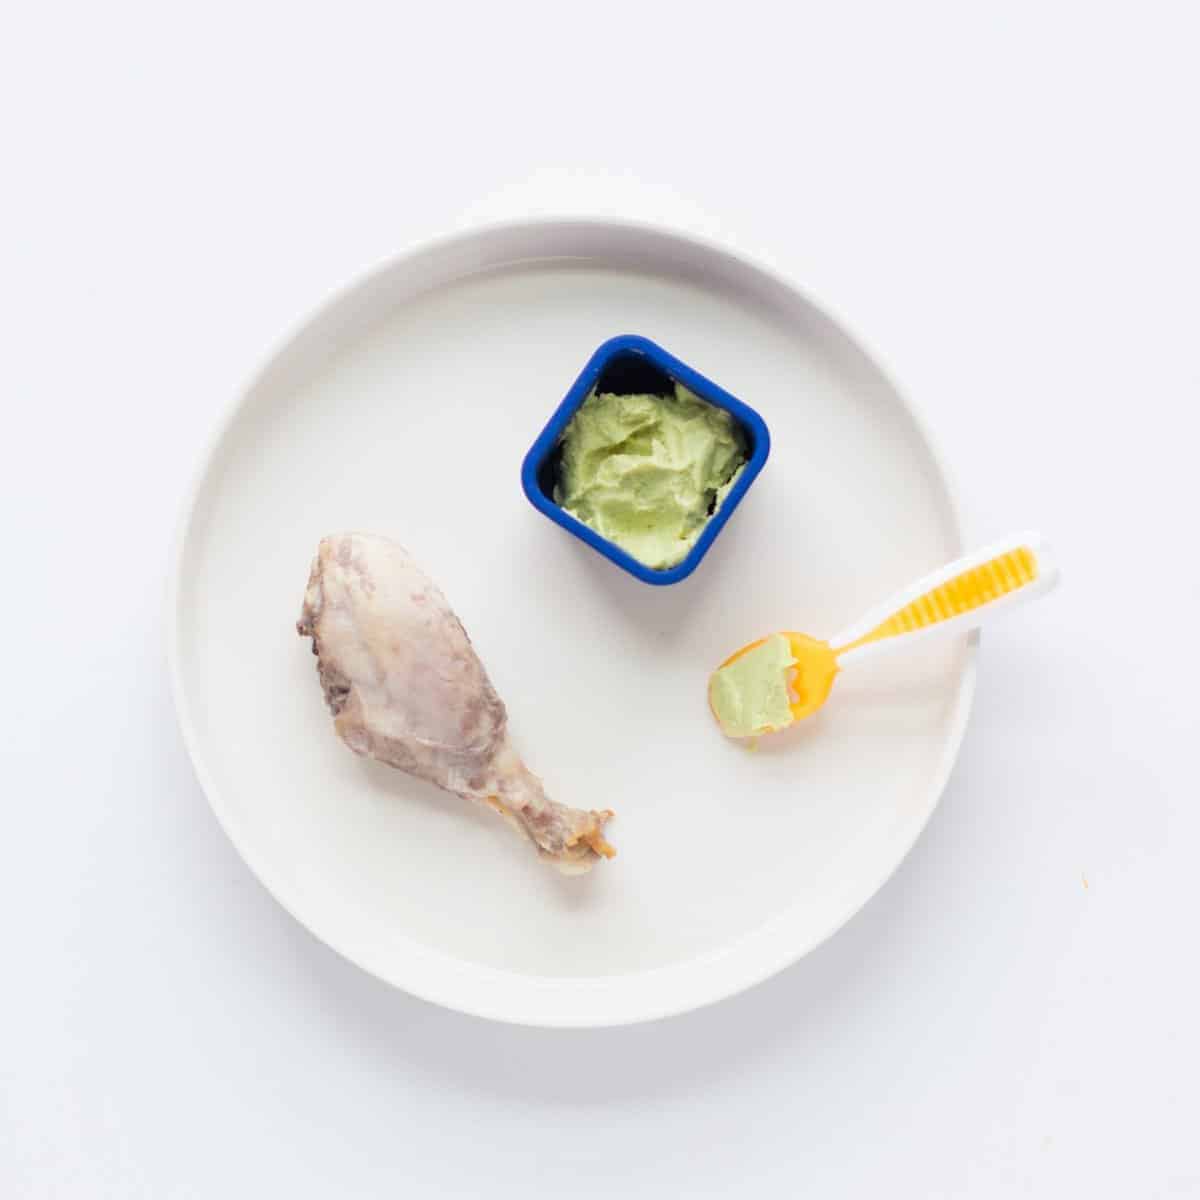 yogurt marinated drumstick with edamame guacamole on a white plate.